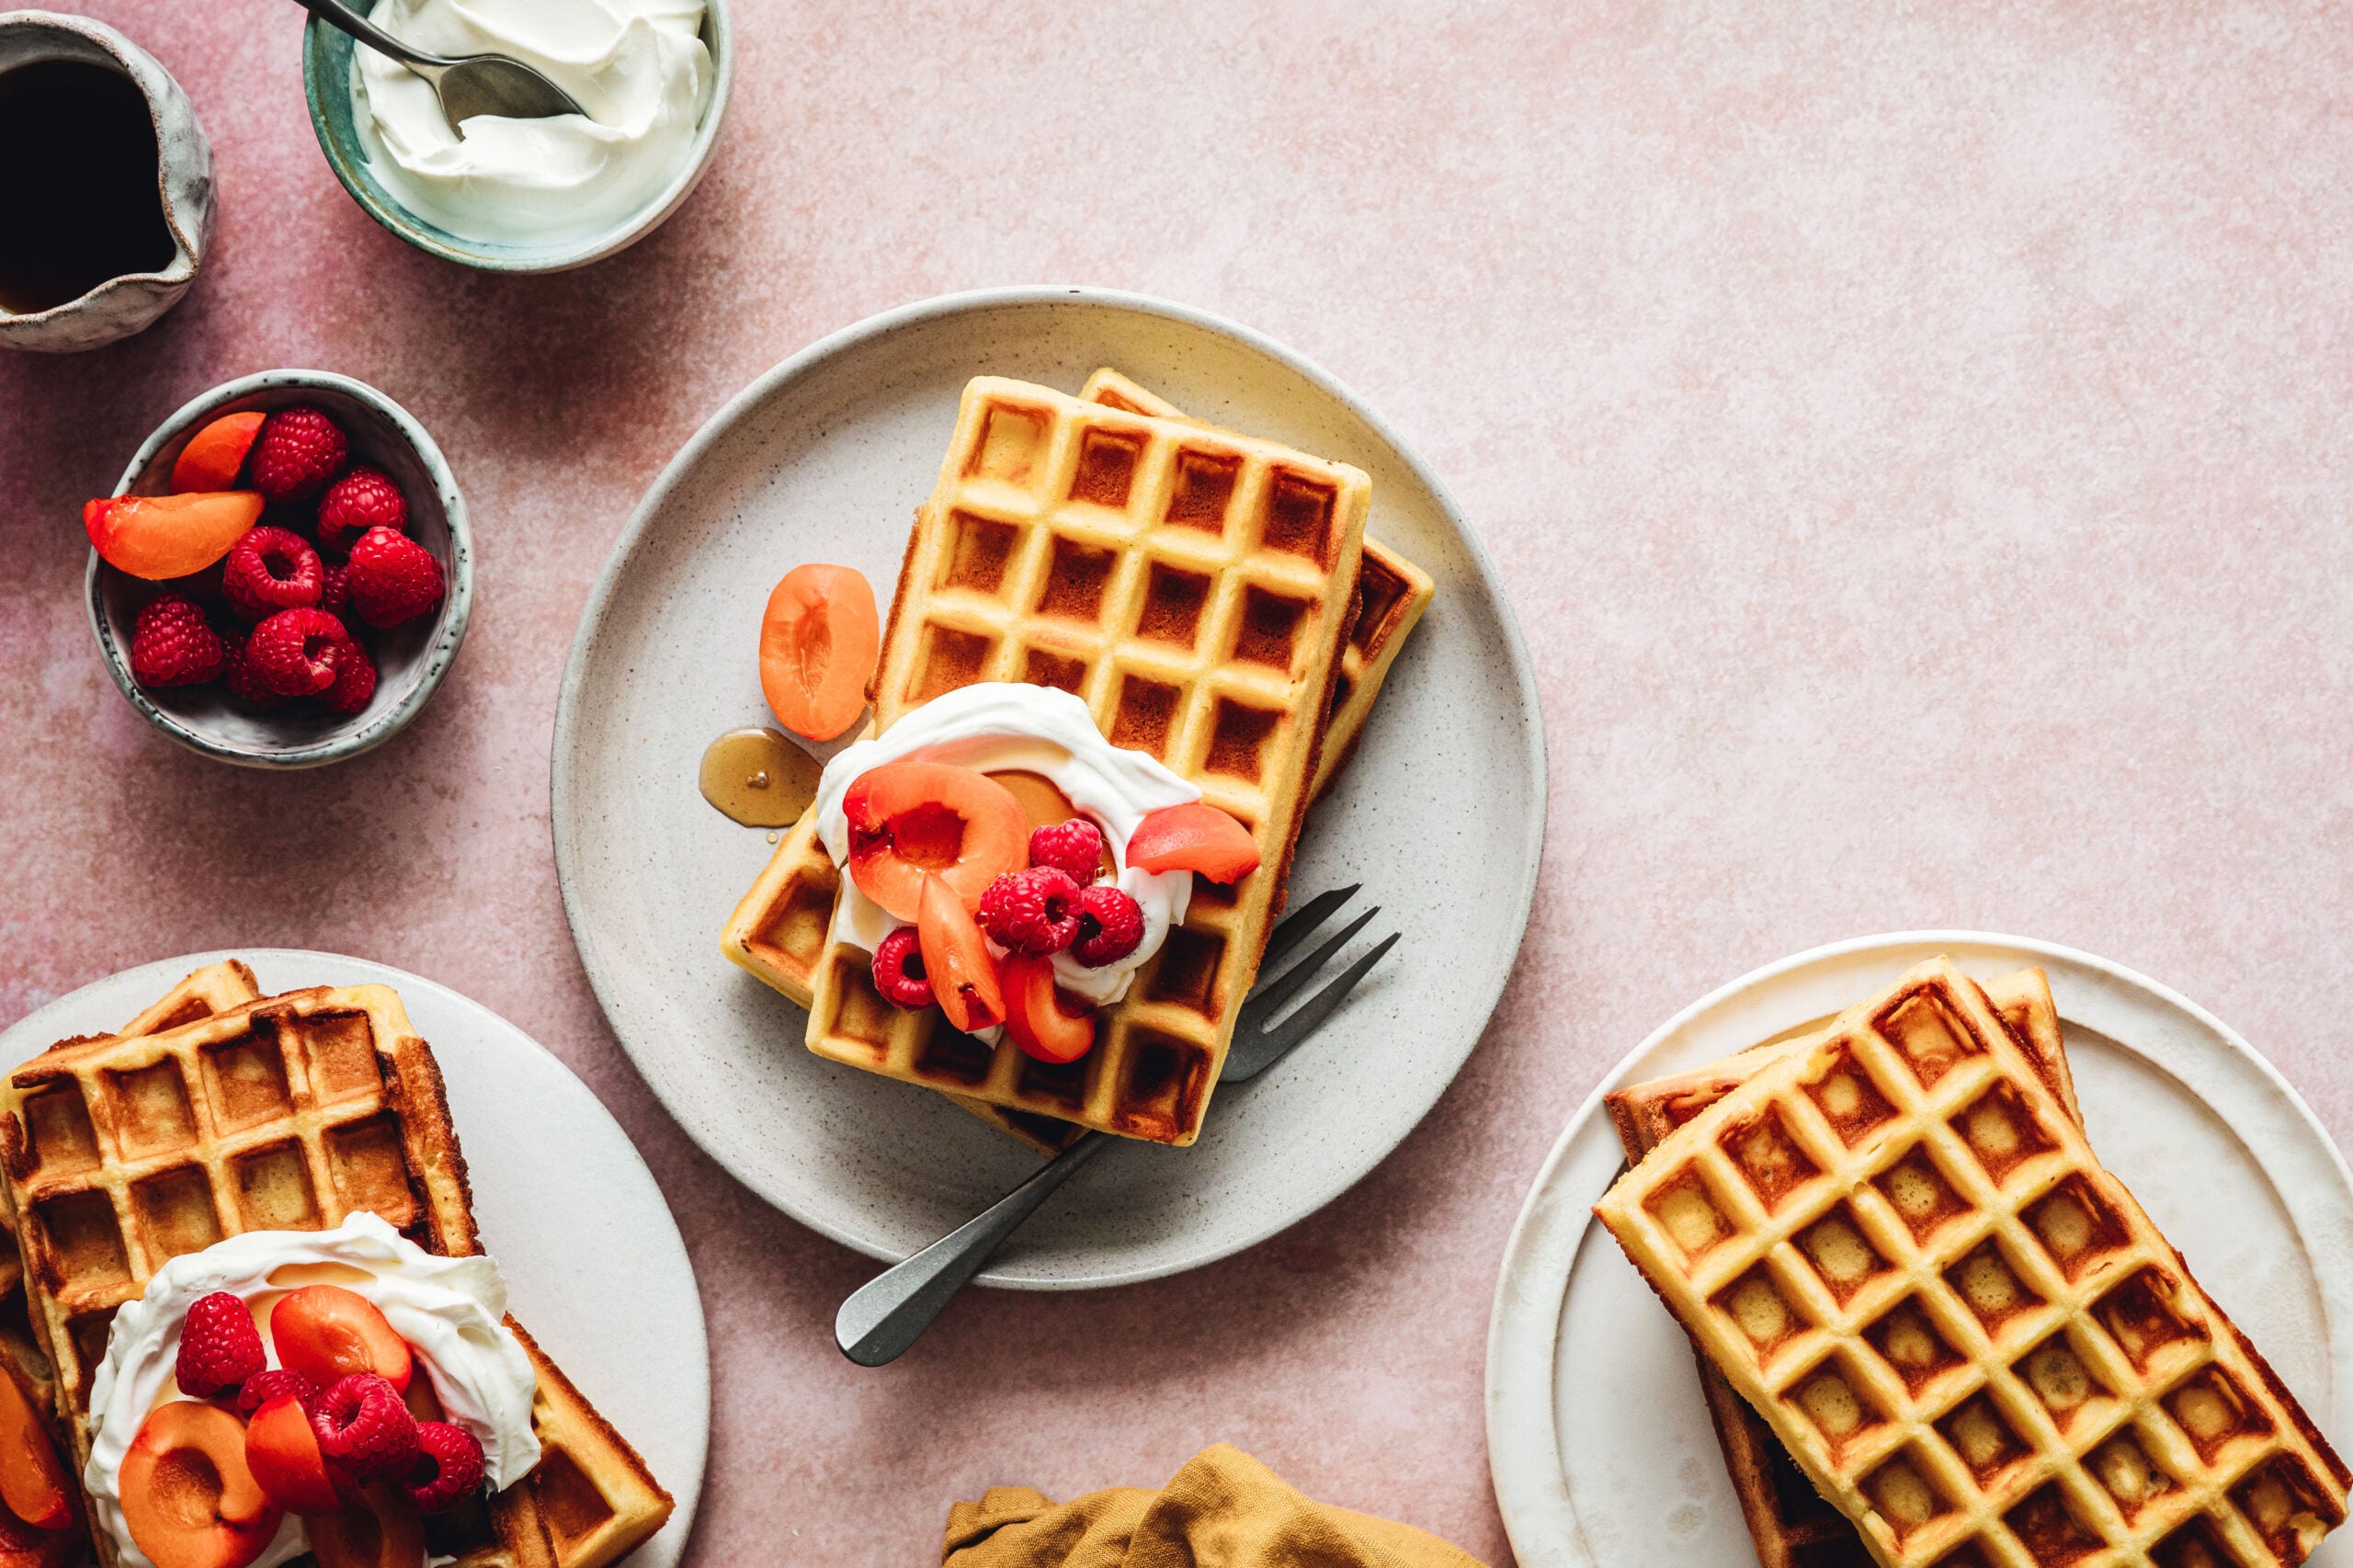 Dash Cream Mini Waffle Maker with Ceramic Nonstick Plates + Reviews